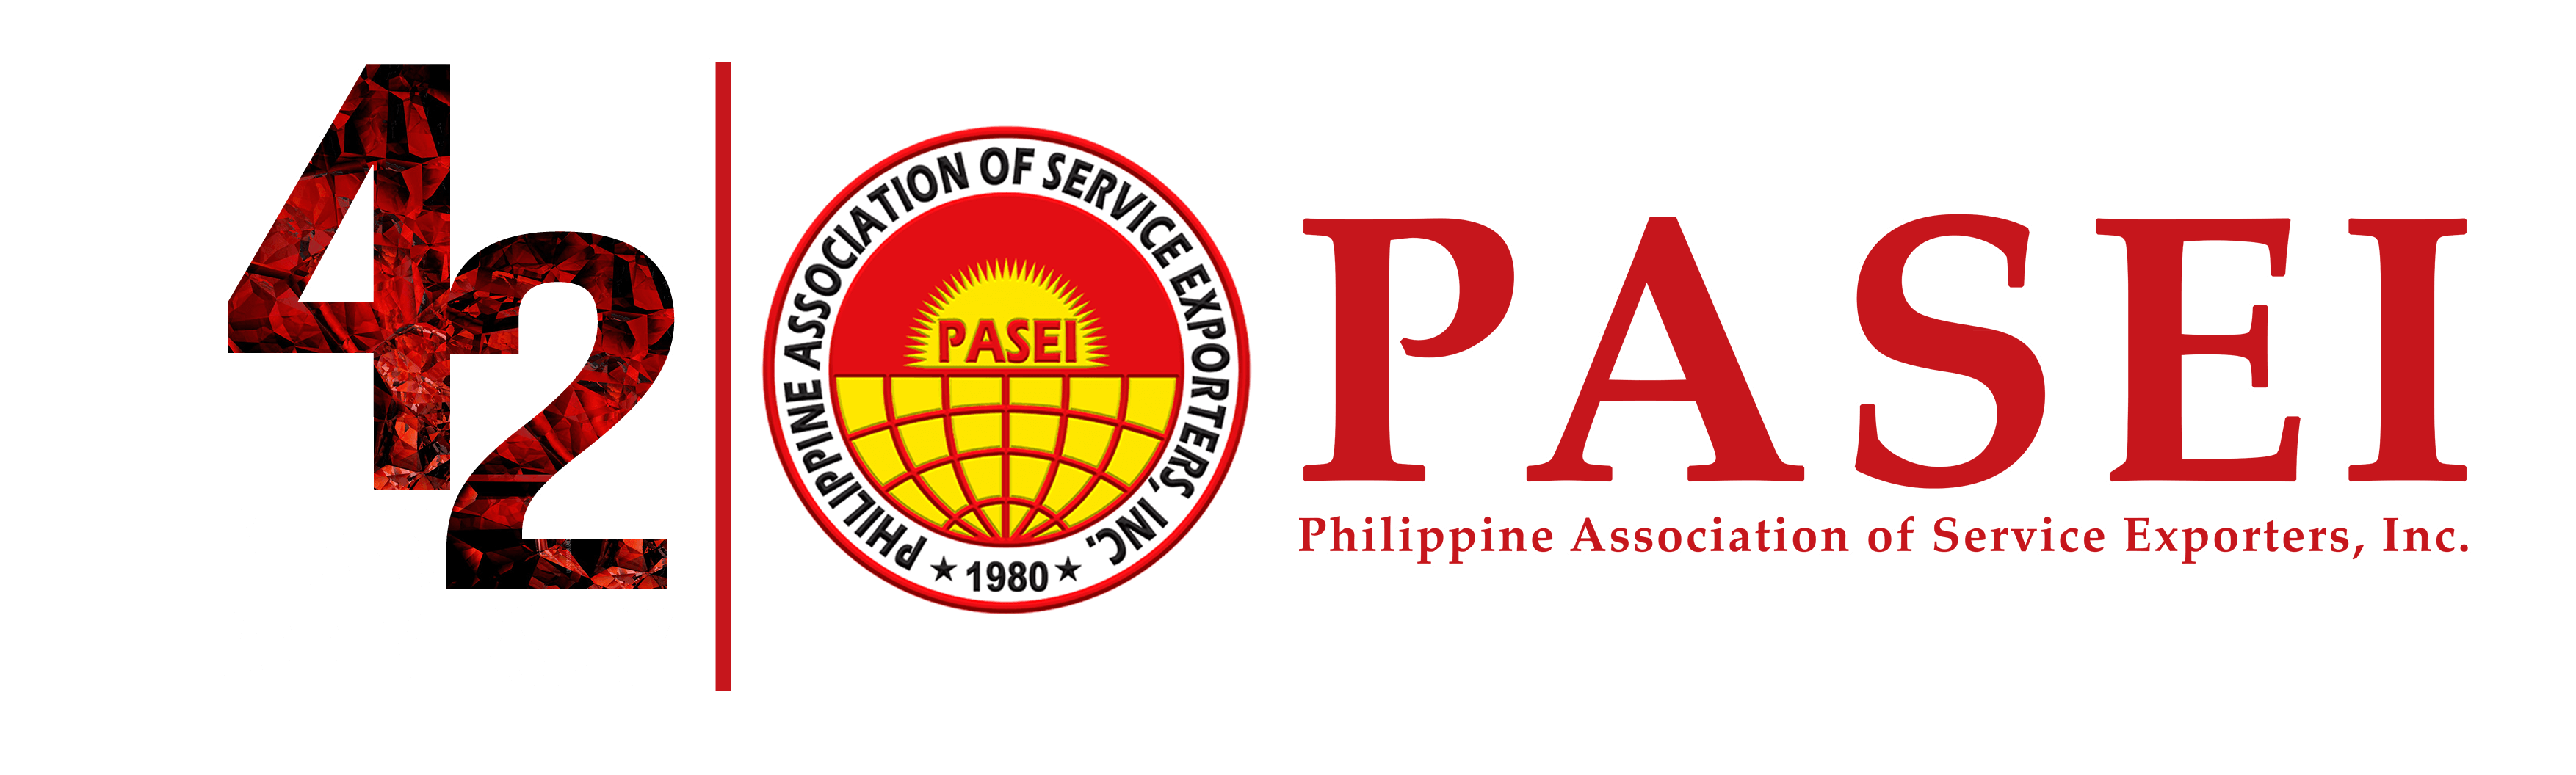 Philippine Association of Service Exporters, Inc. (PASEI).